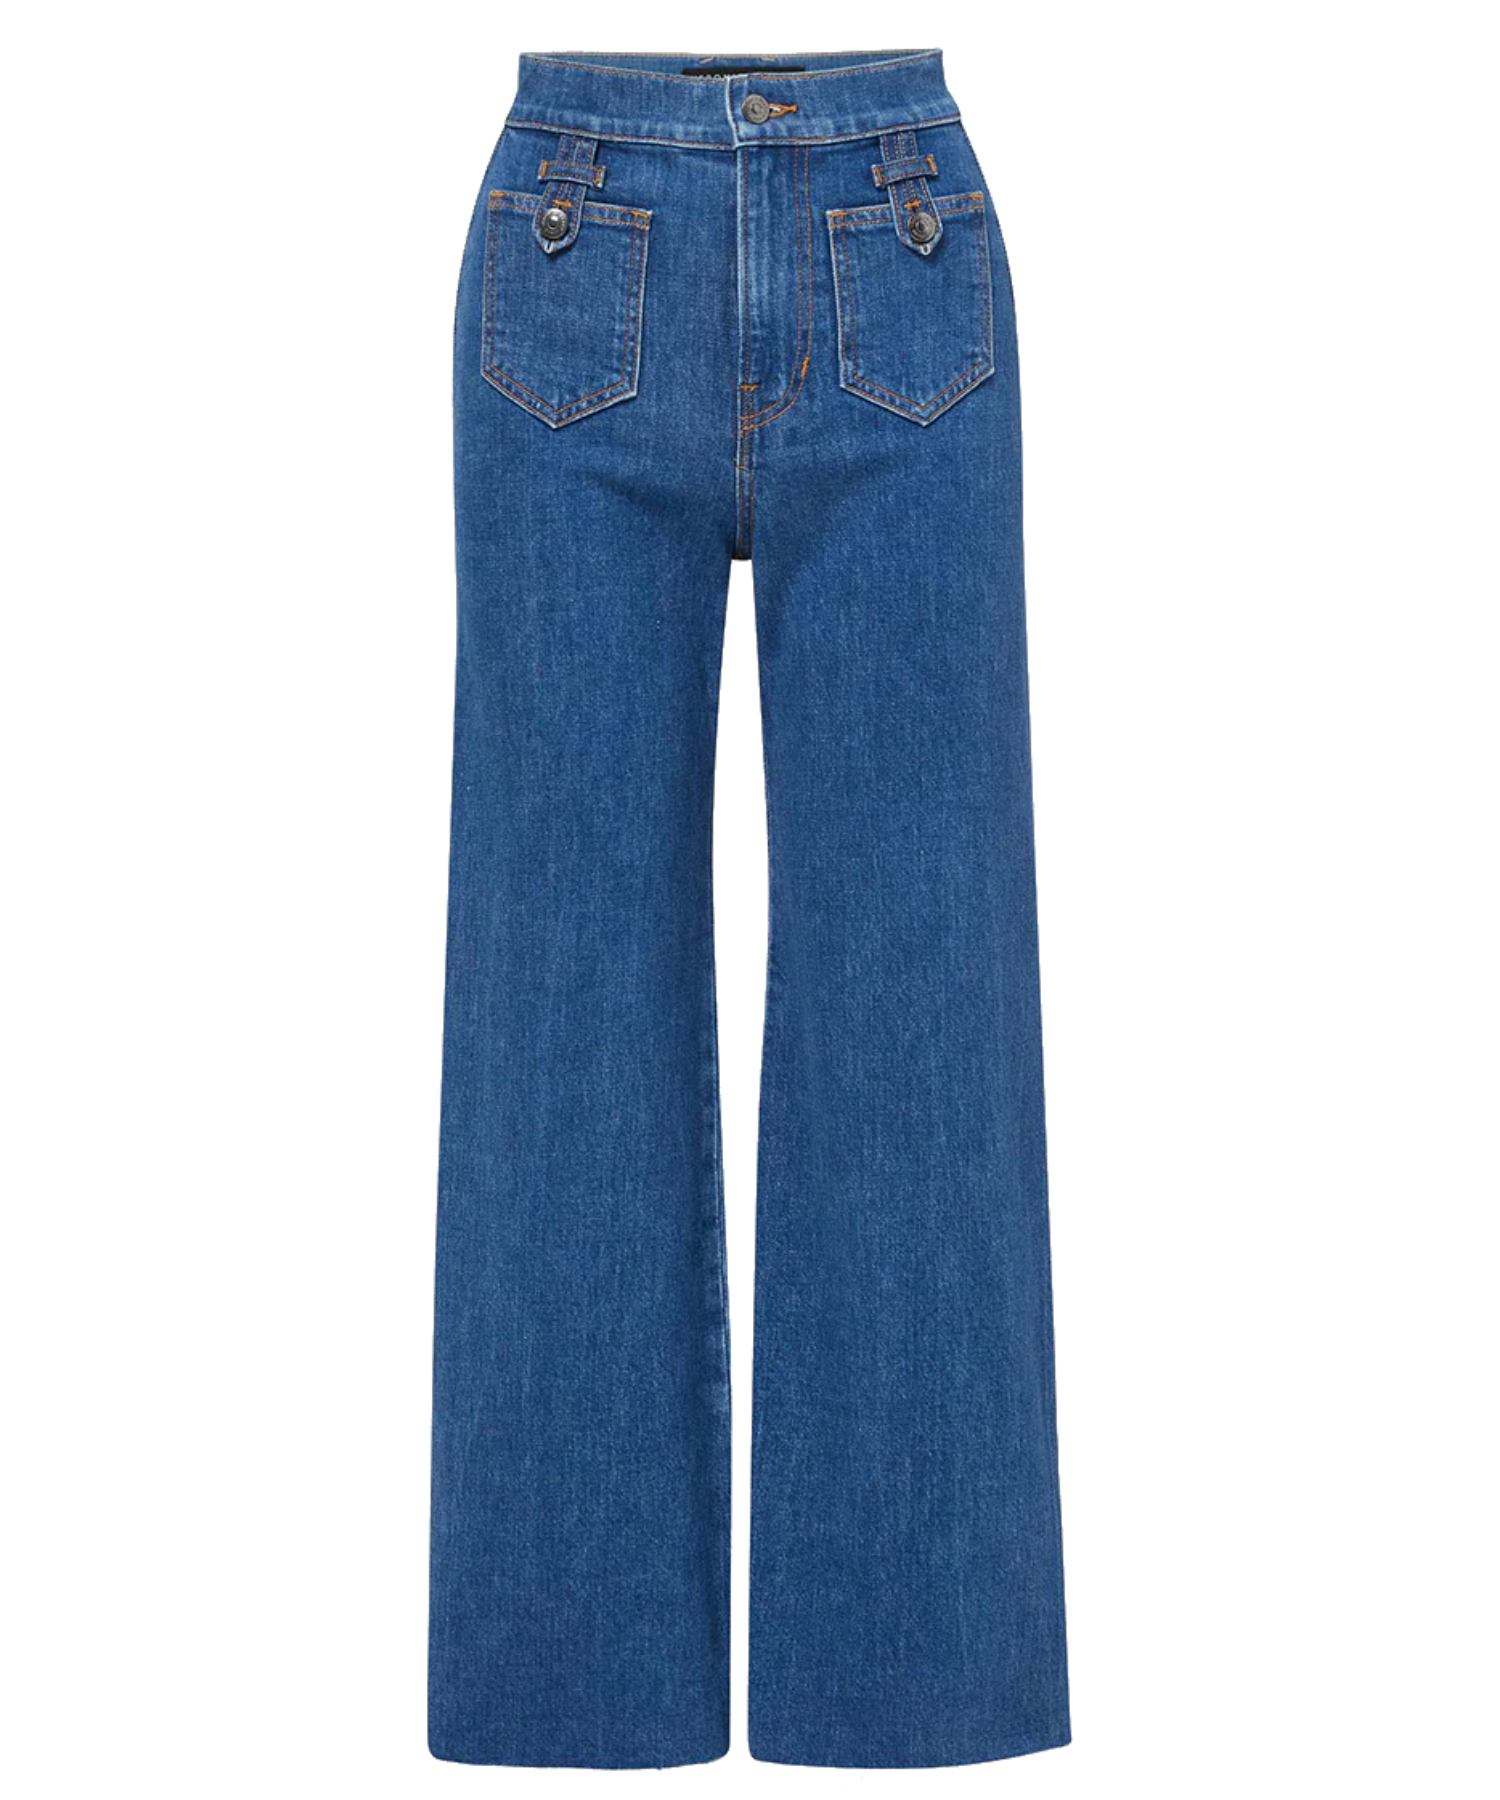 Veronica Beard Lakewood Grant Patch Pocket Jean